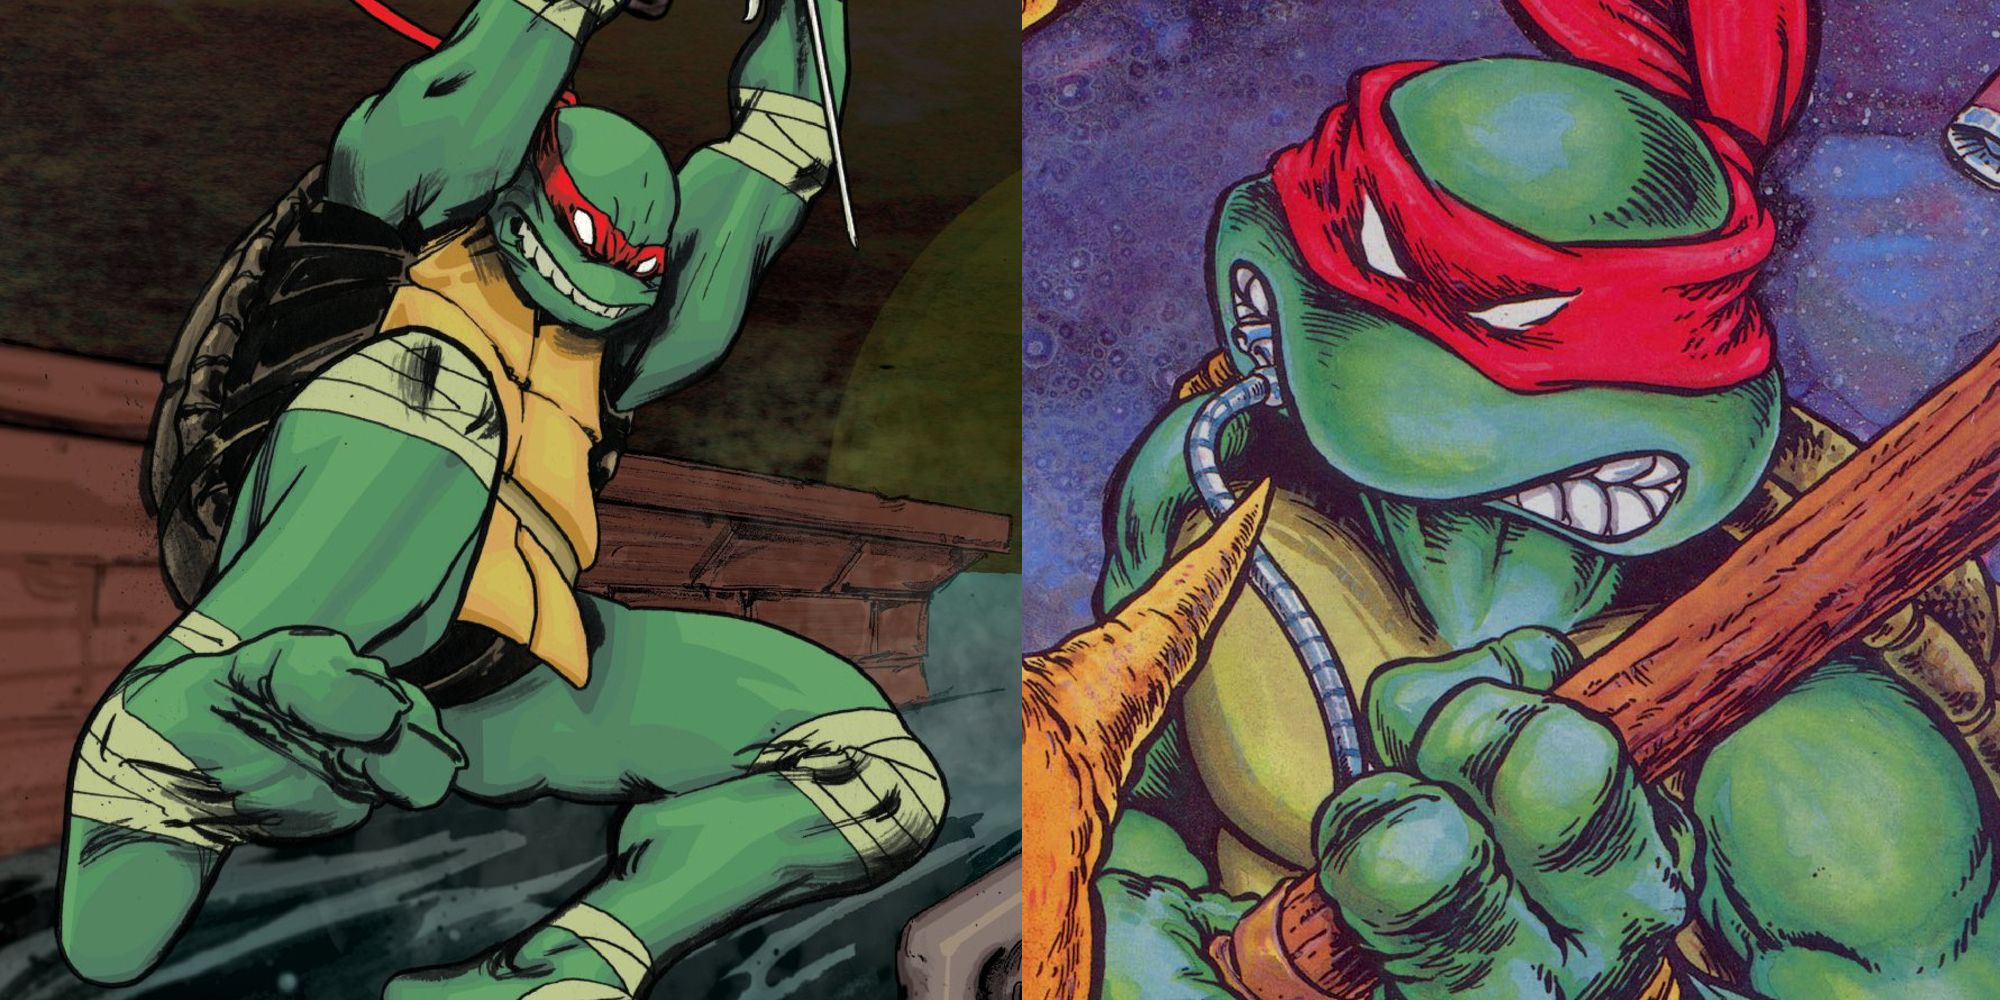 Raphael swinging; Donatello with a red headband